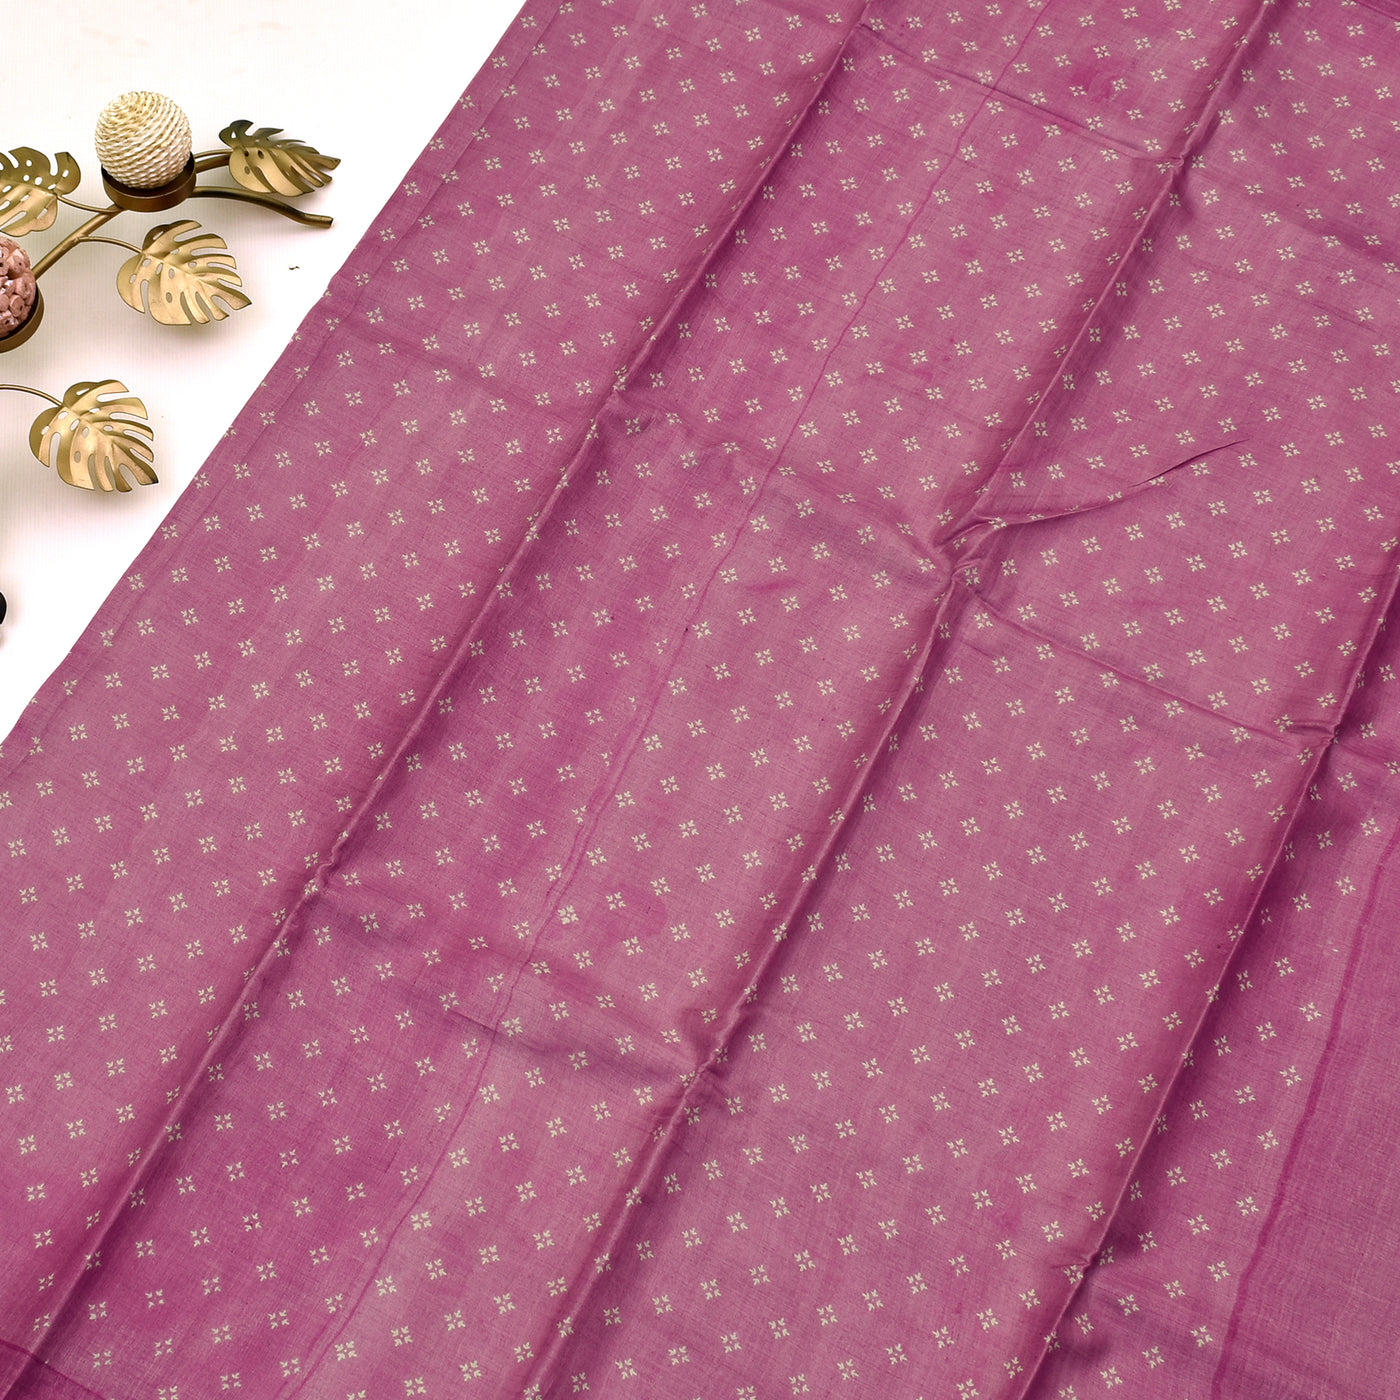 Lotus Pink Tussar Printed Saree with Small Butta Design